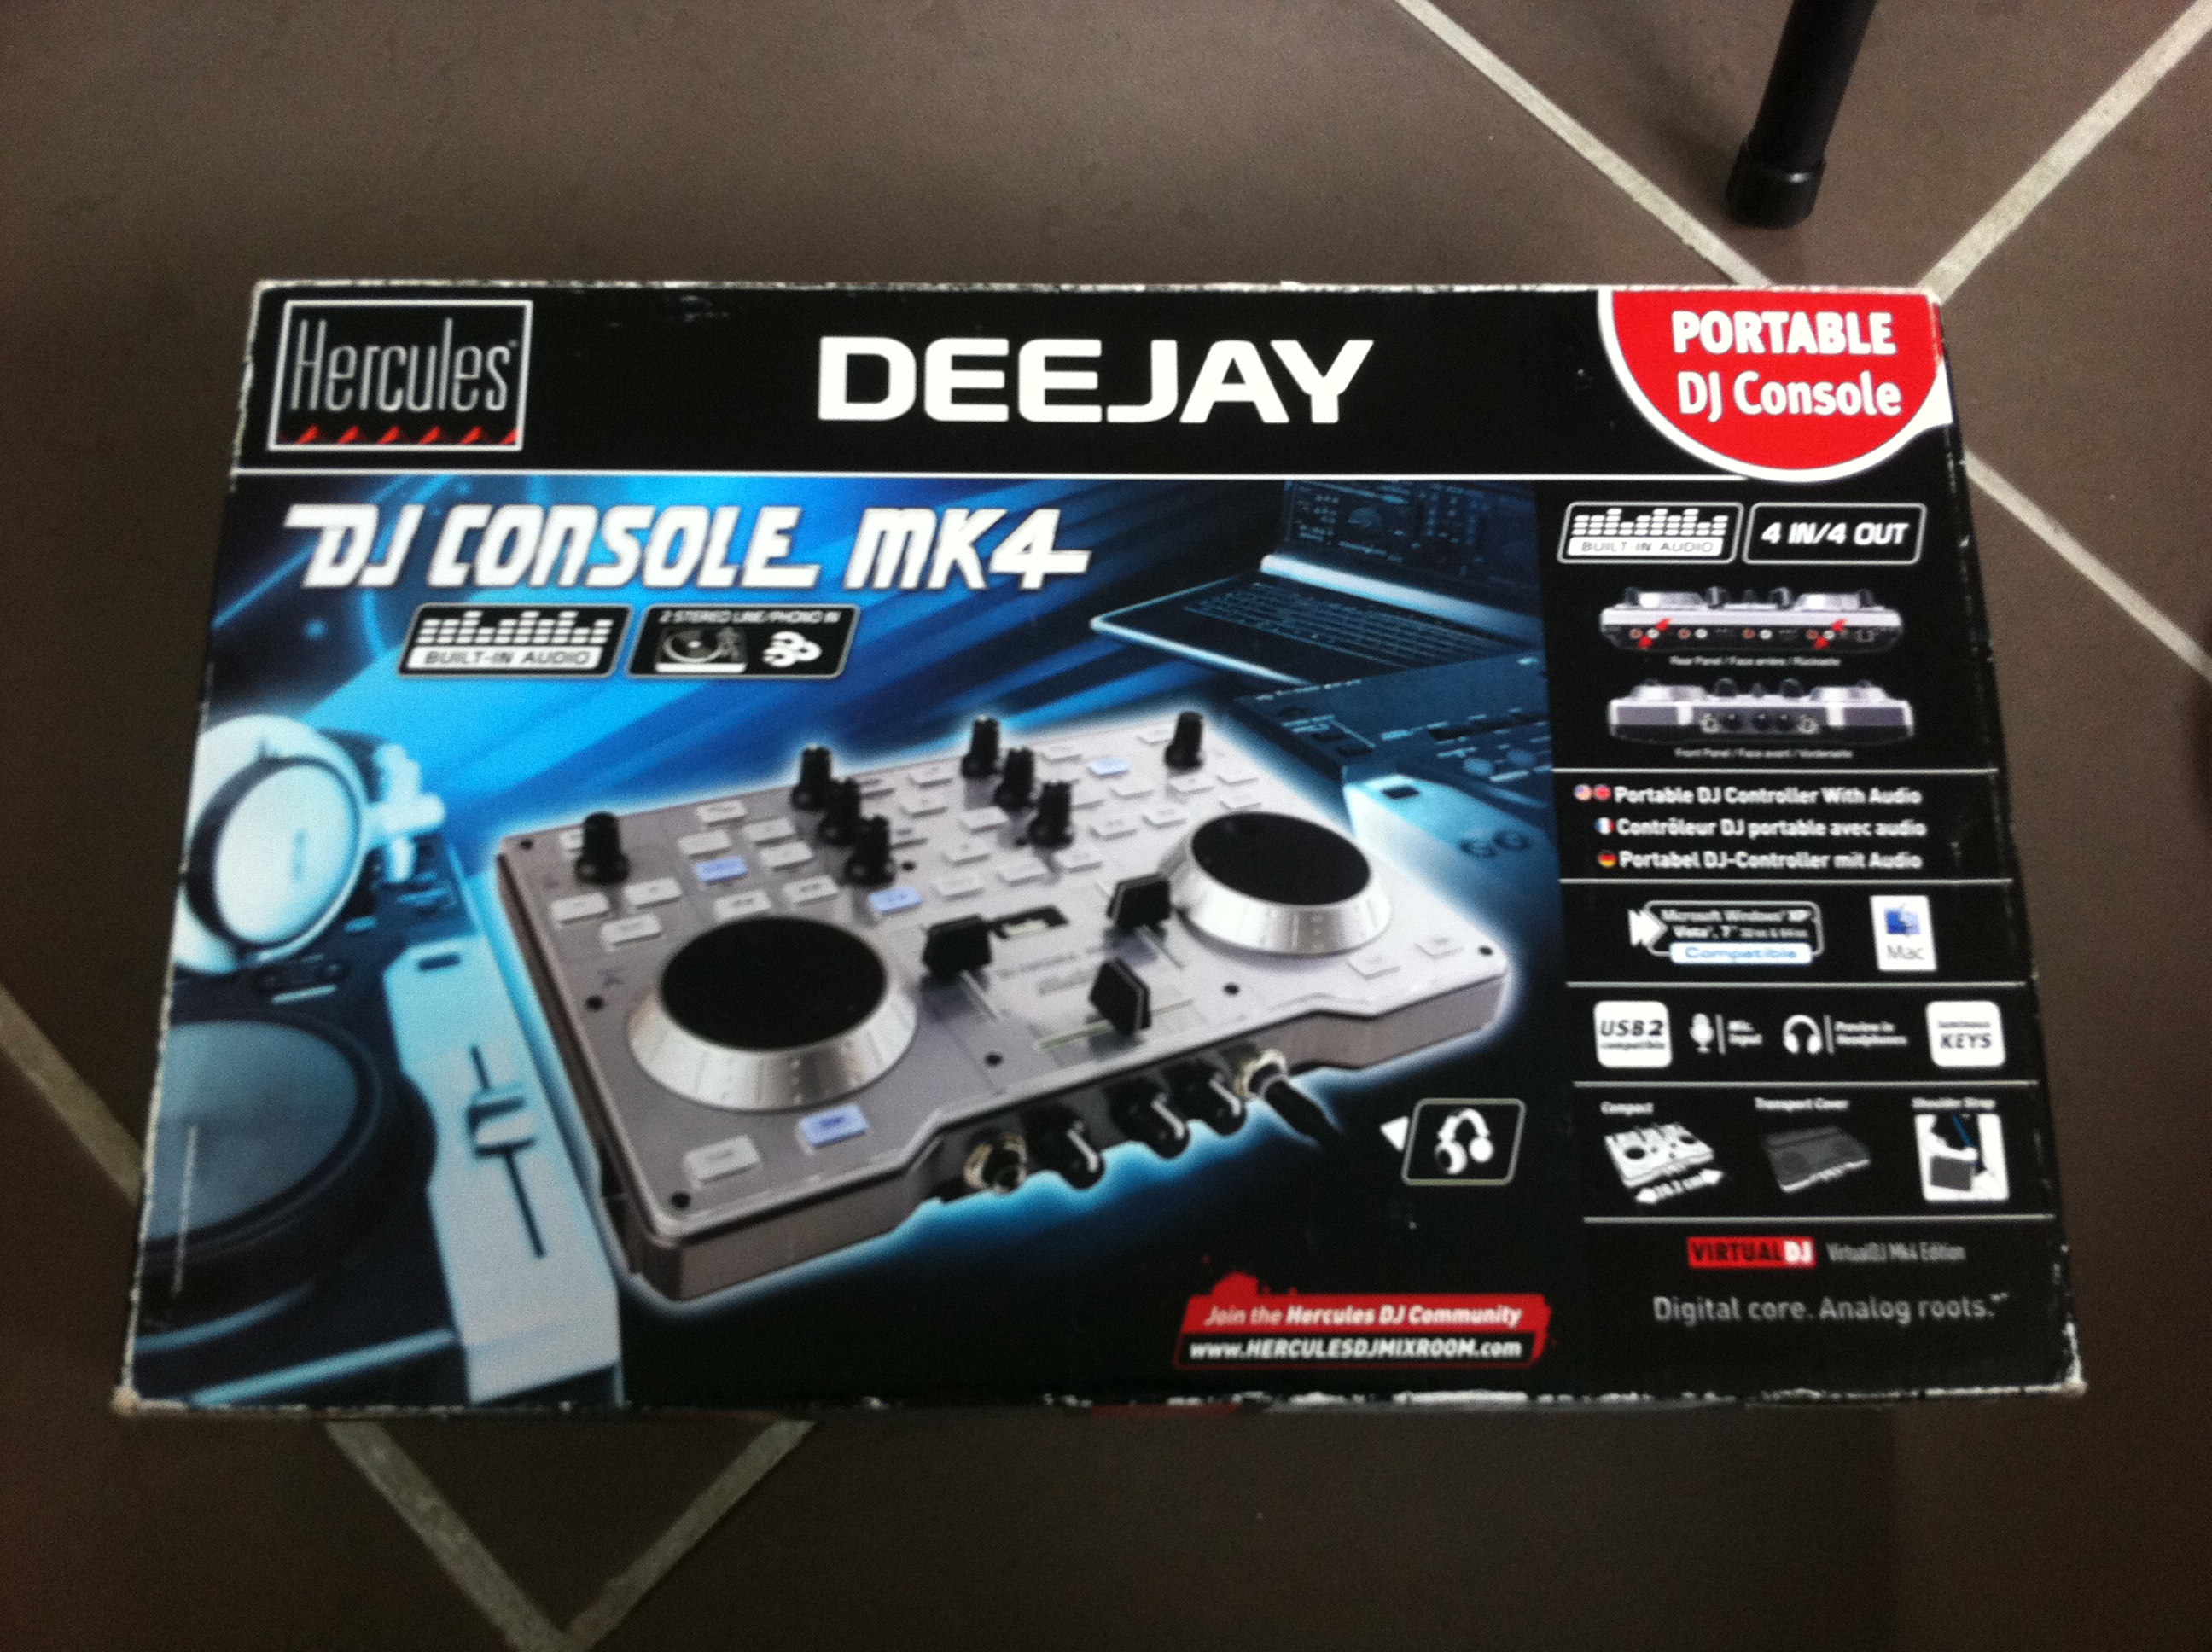 DJ Console MK4 - Hercules - Support website